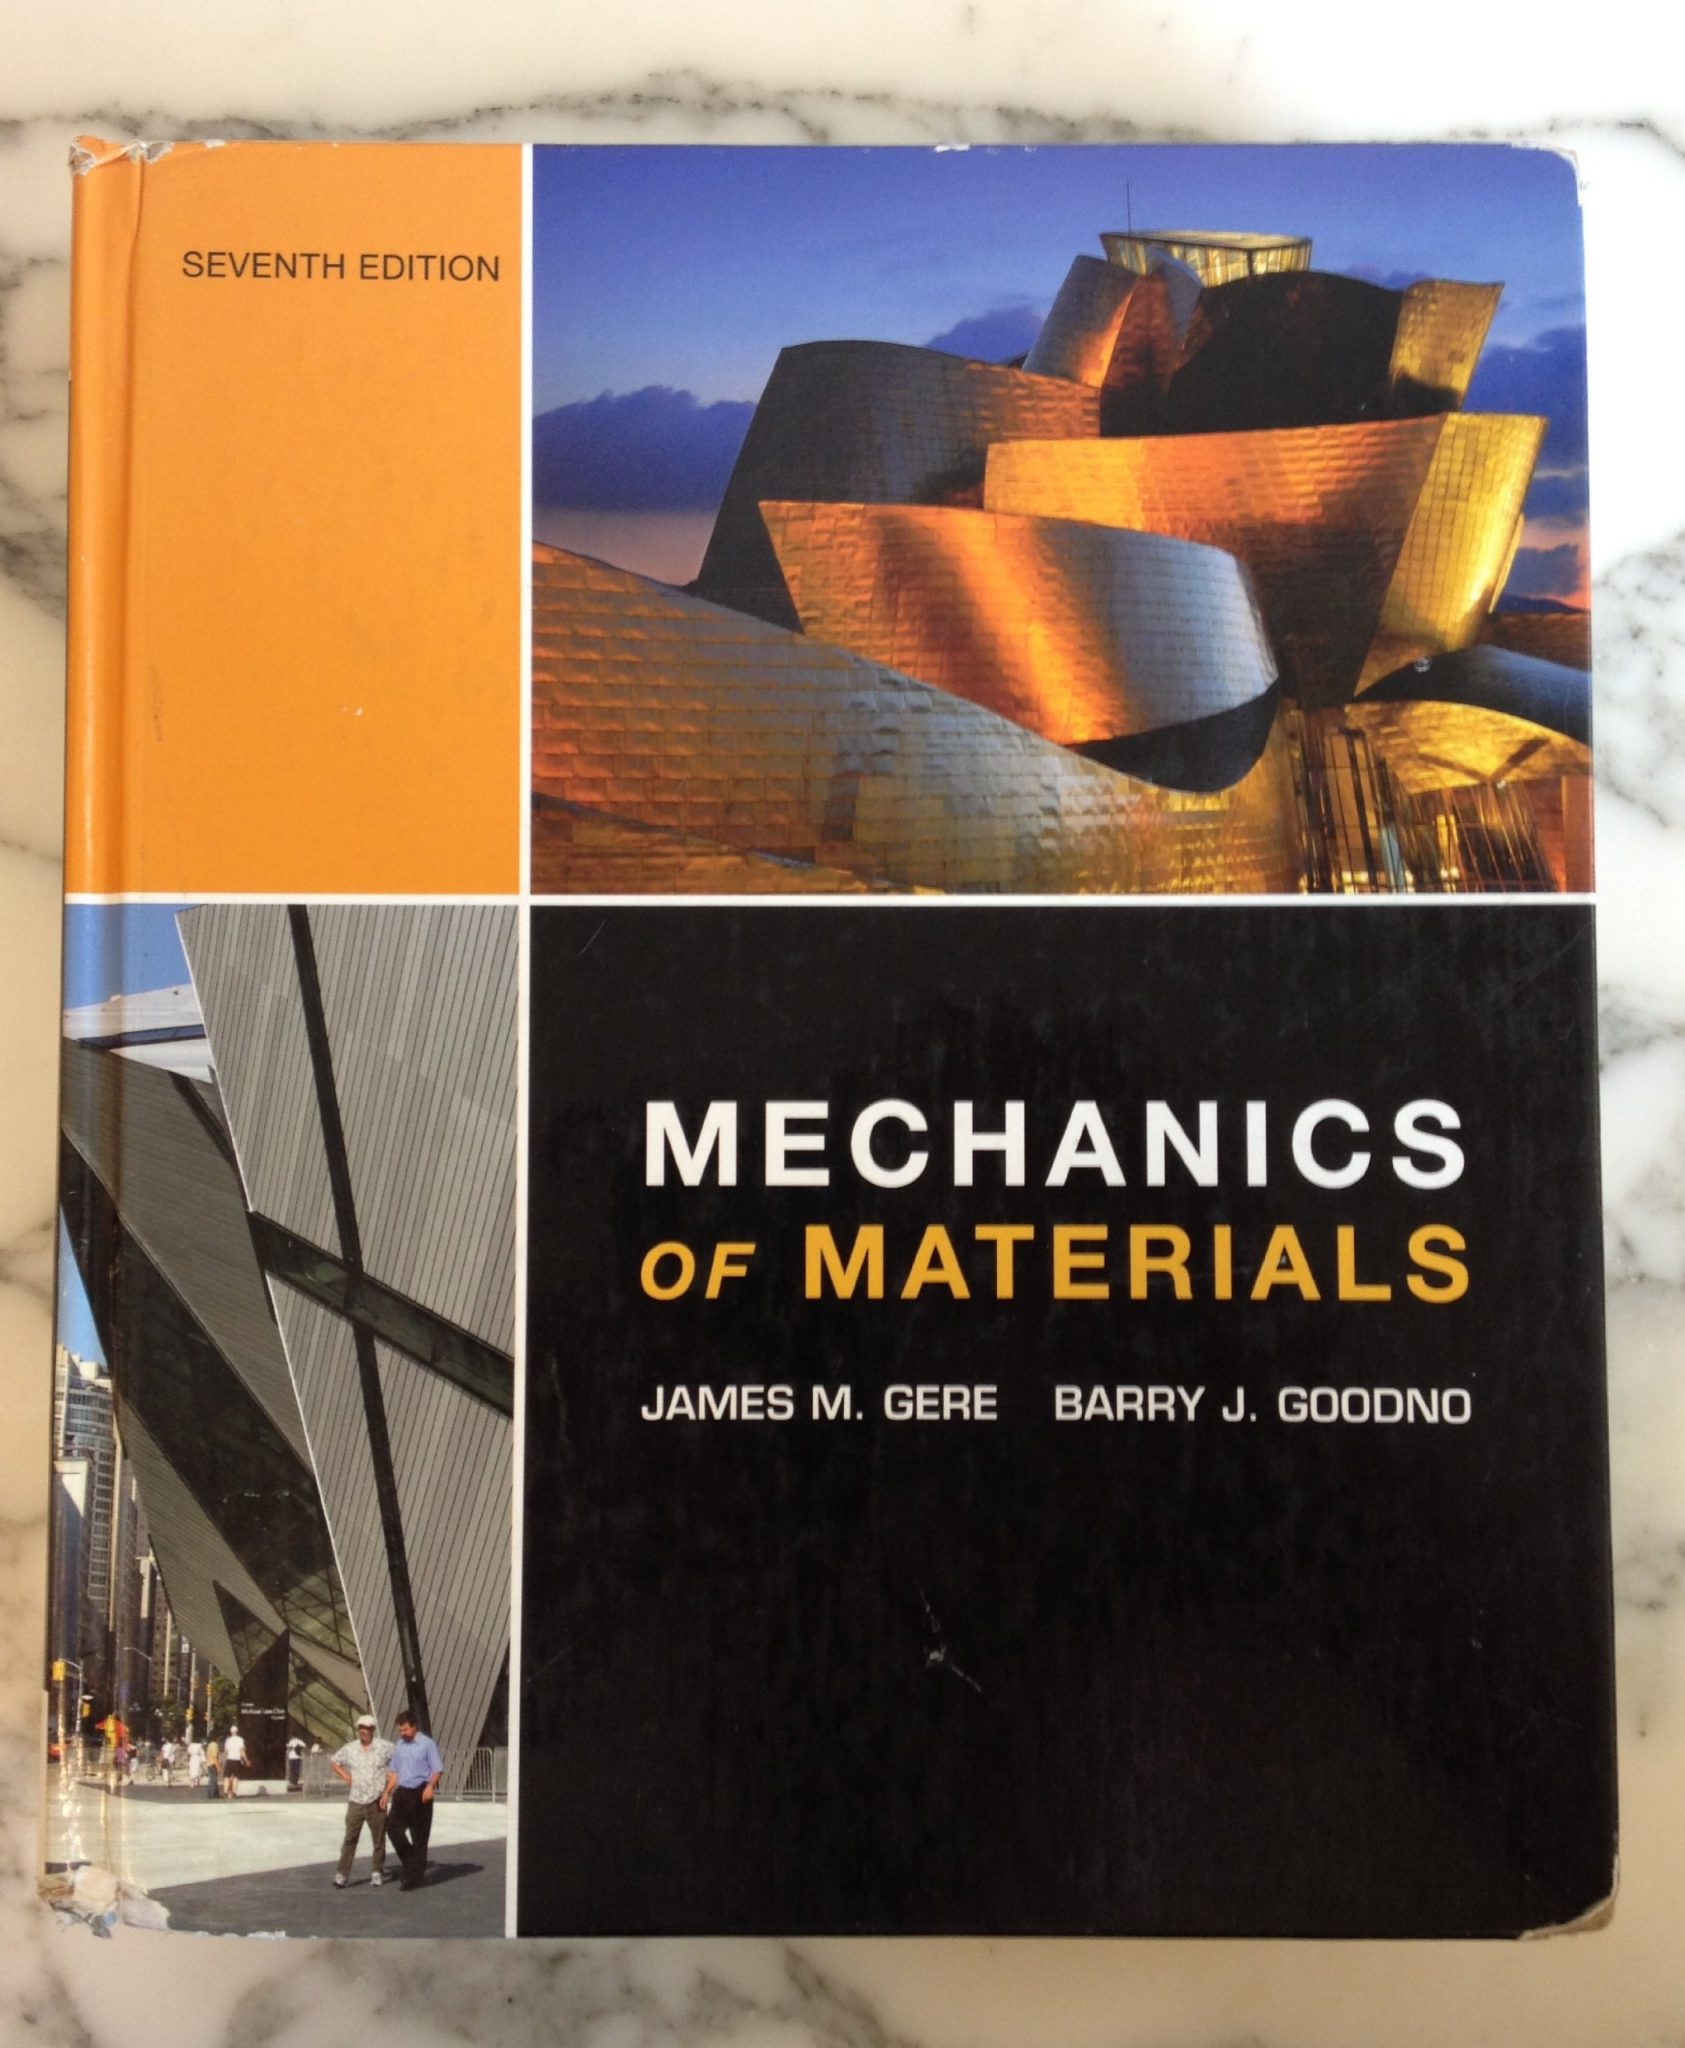 Mechanics of Materials 7th Edition PDF Free Download